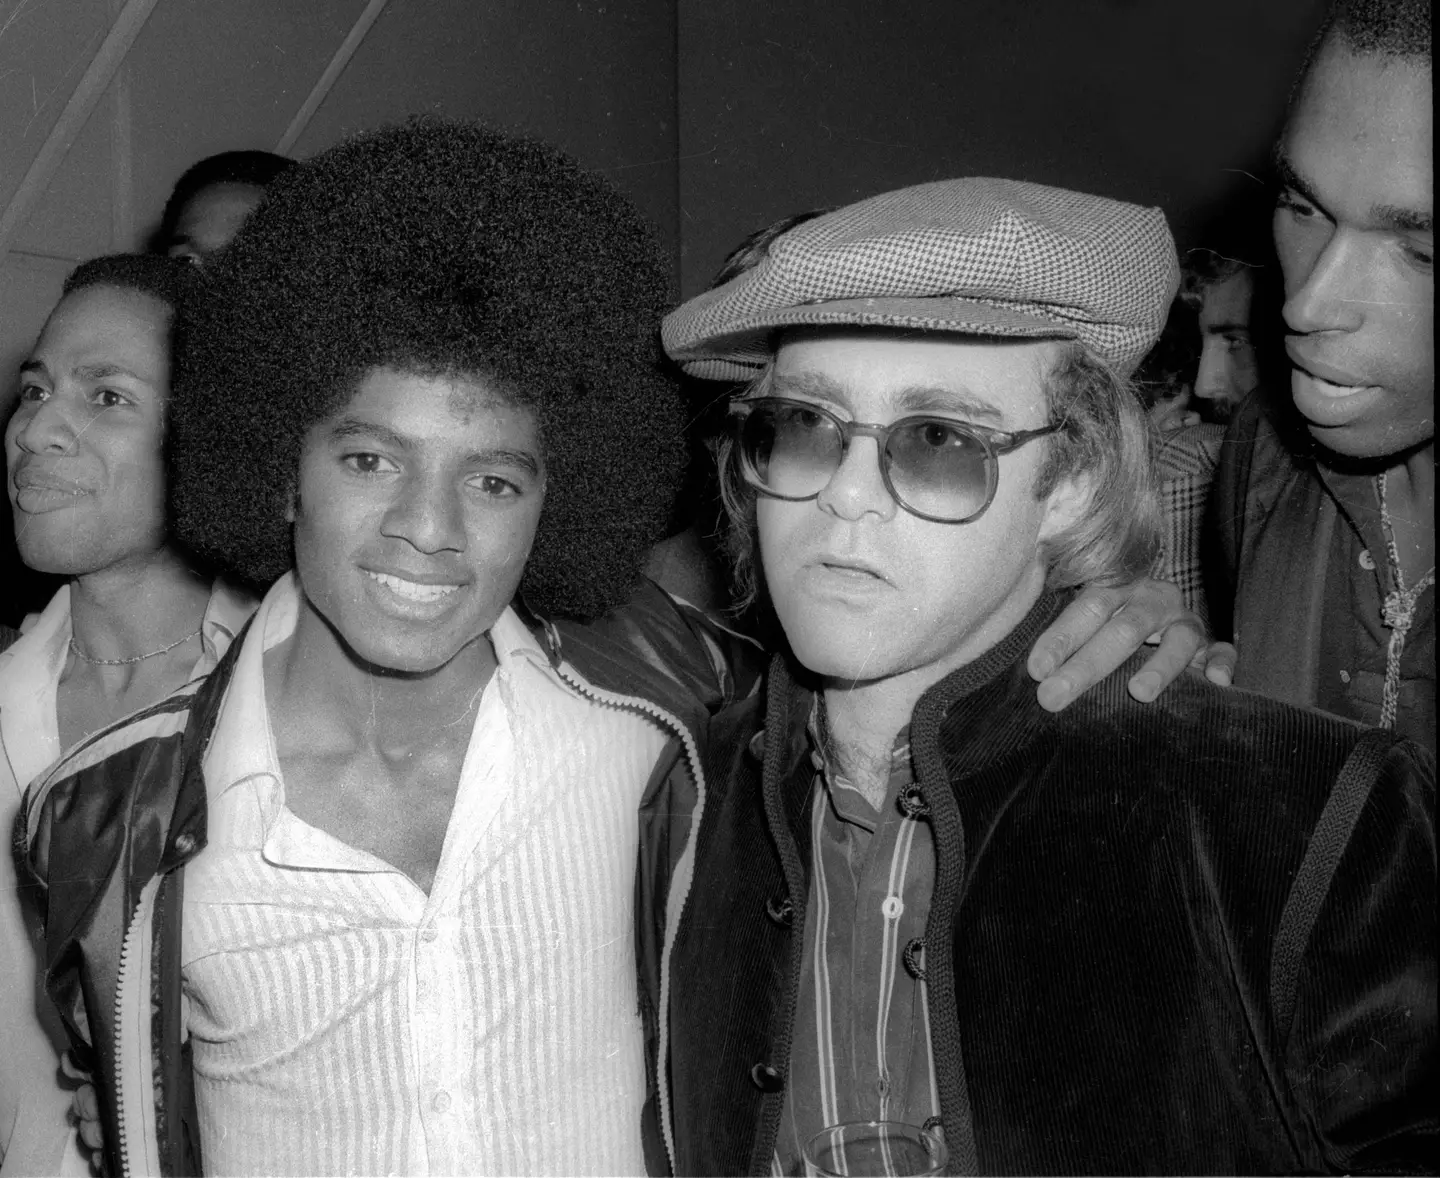 Elton John with Michael Jackson in 1978.